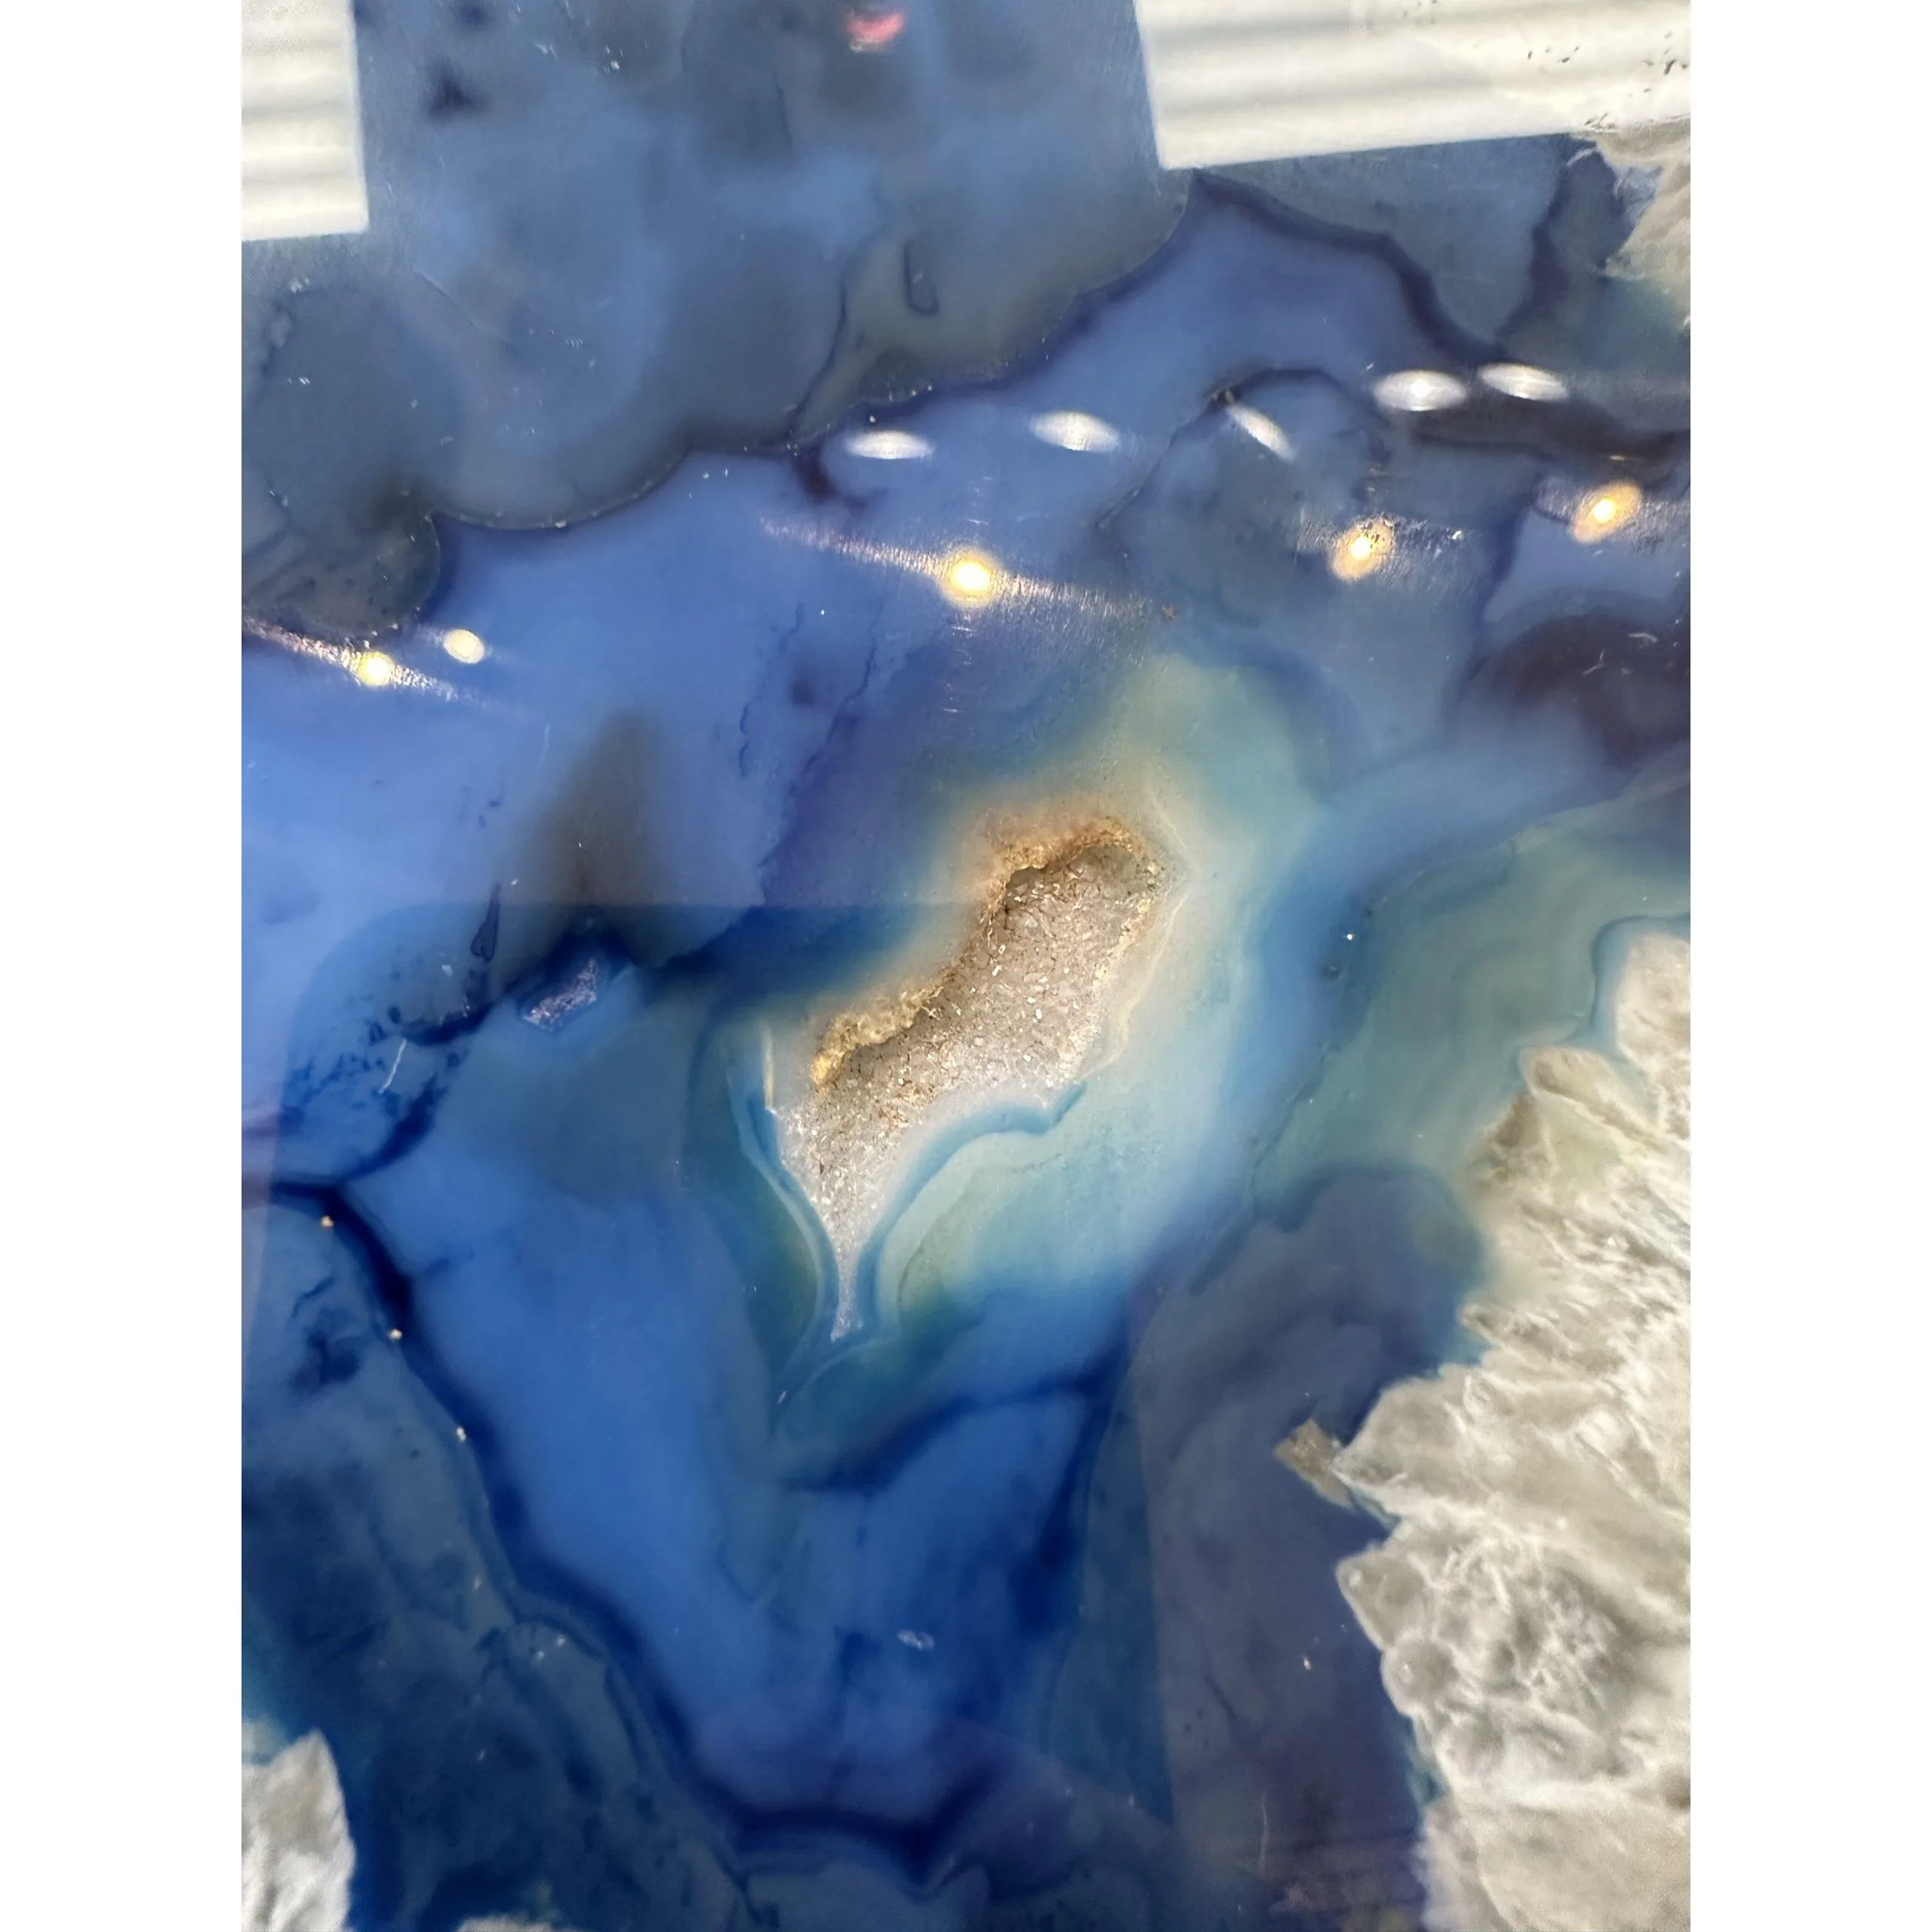 Dyed Agate Slice – Blue Color Prehistoric Online